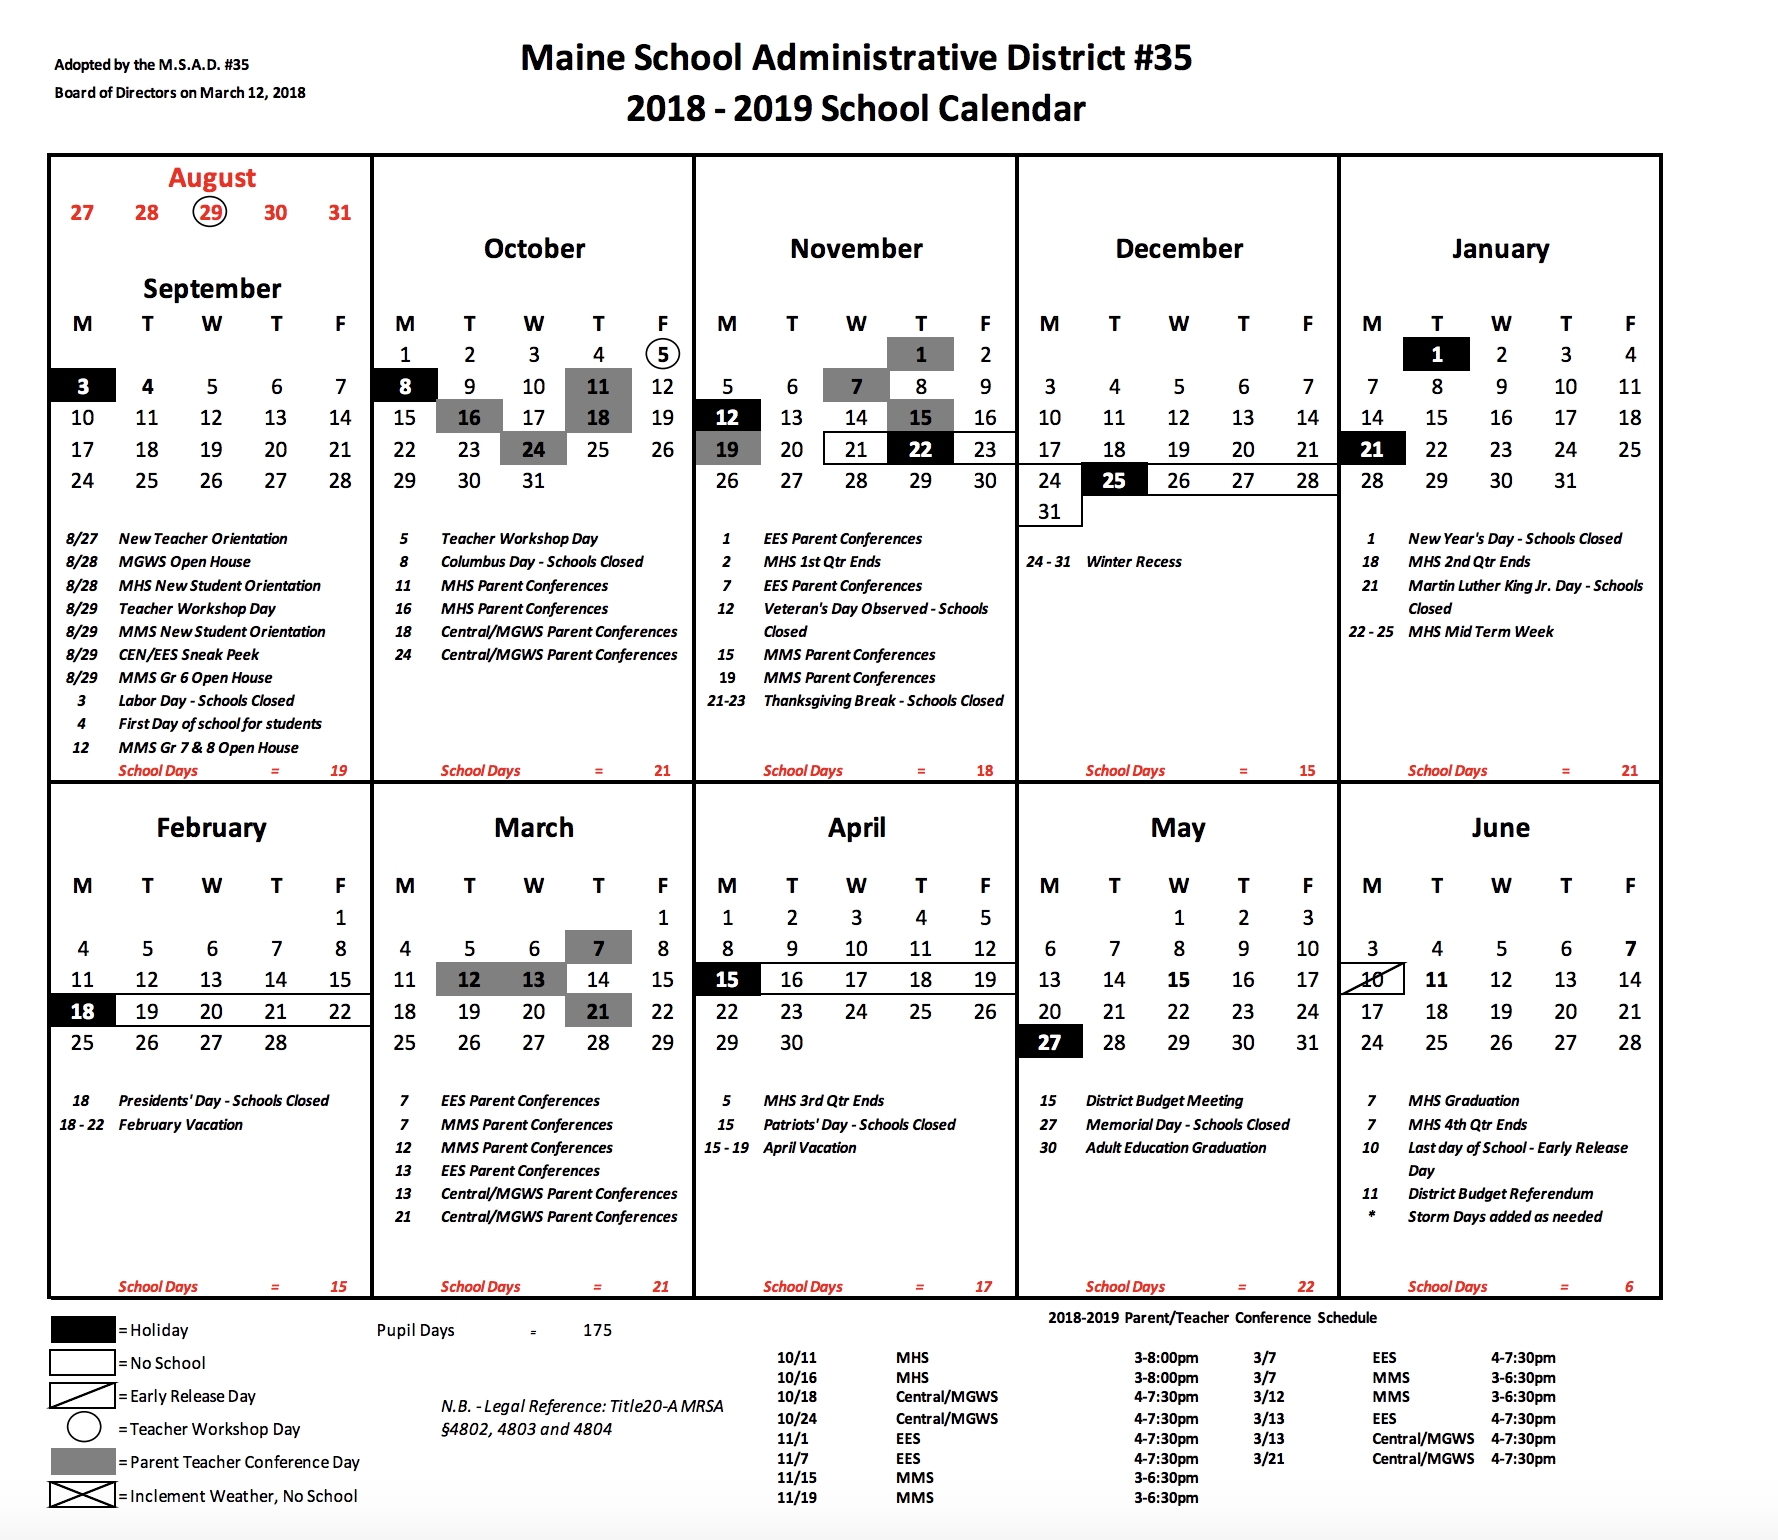 School Calendar For 2018-2019 Approved March 12 Msad 1 School Calendar